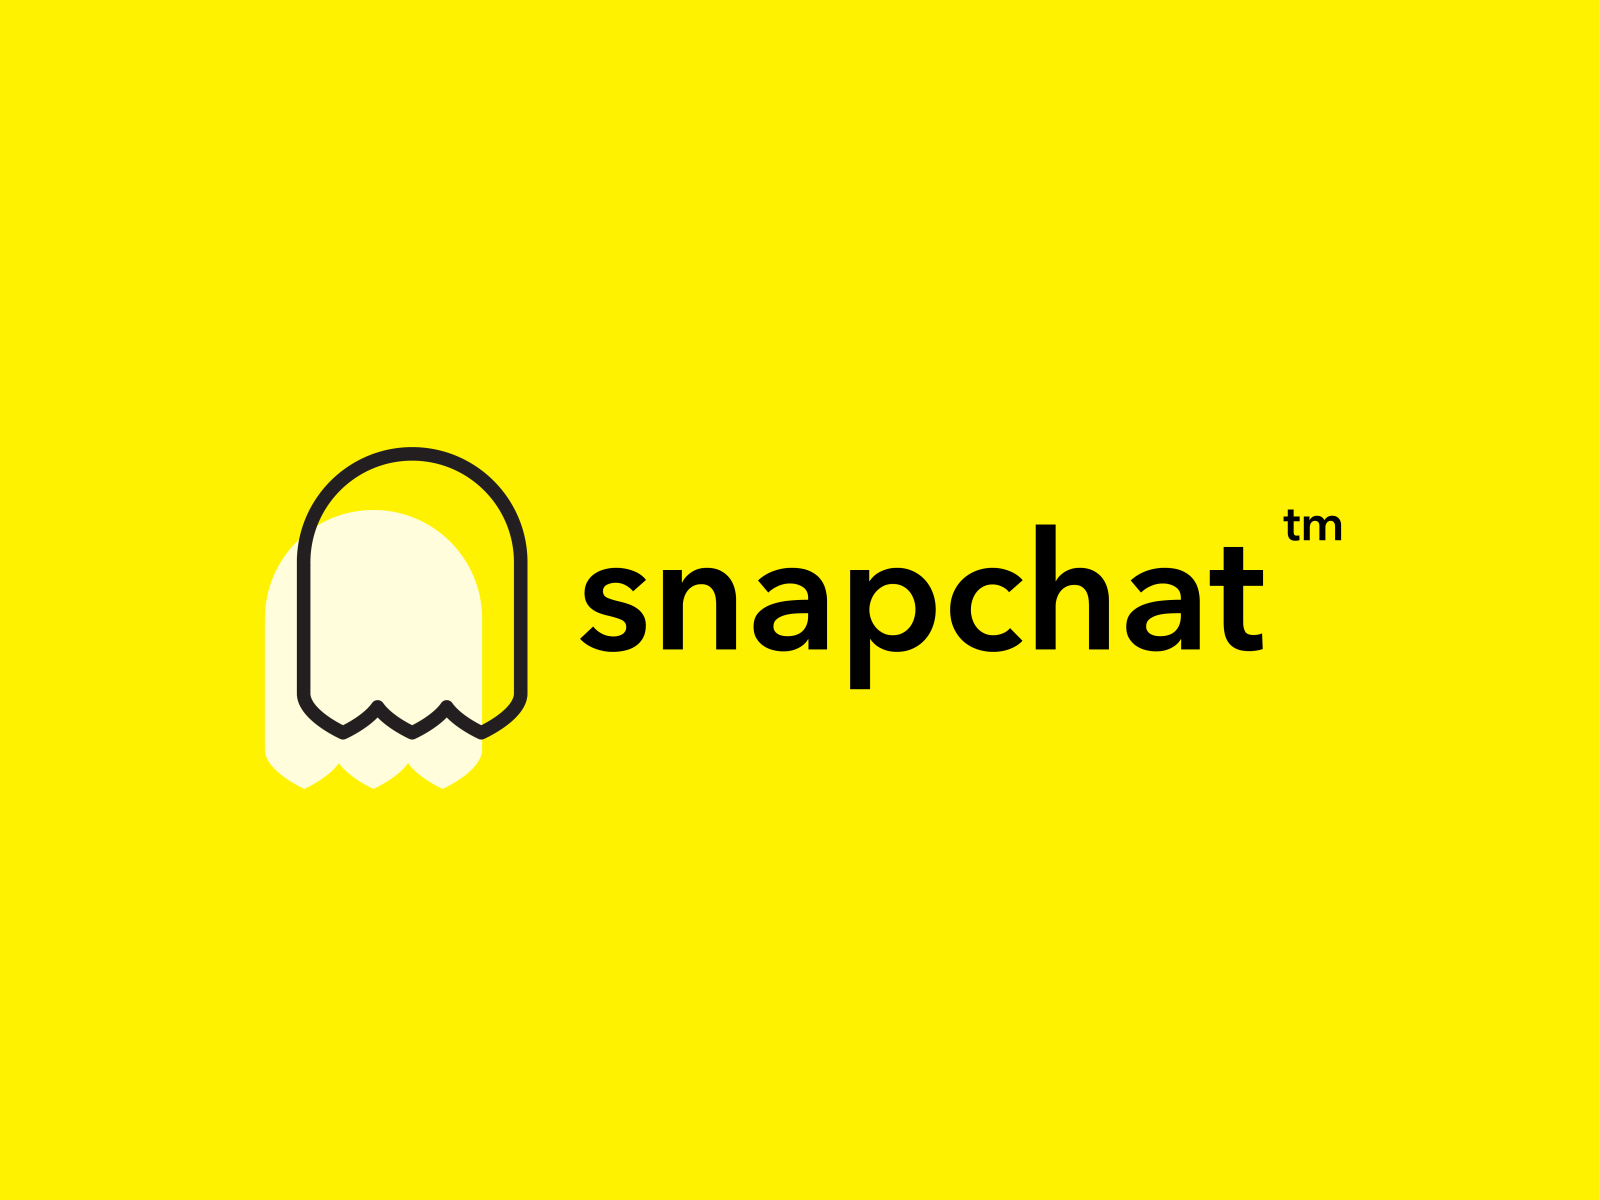 Snapchat Logo Redesign by Jake Hamilton on Dribbble